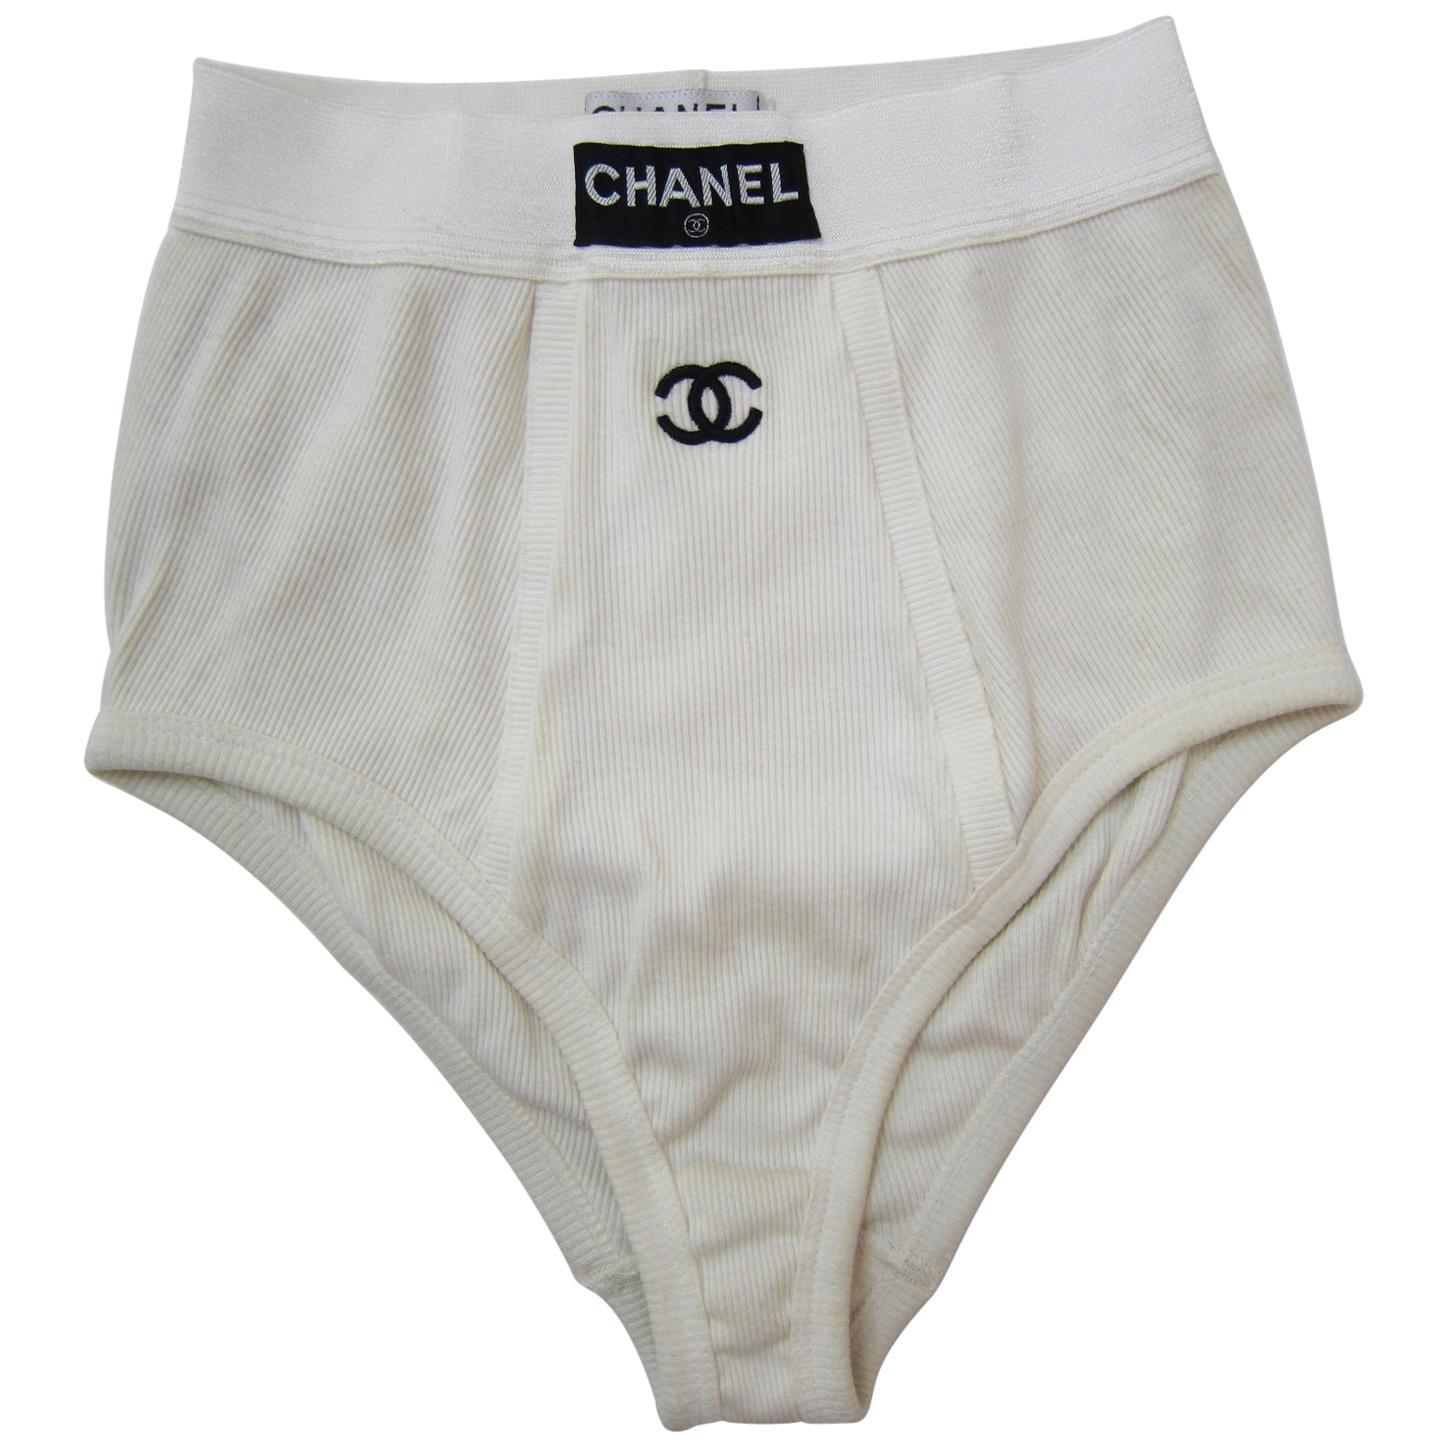 Chanel High Waist Panties Brief Underwear NWB ss 1993 